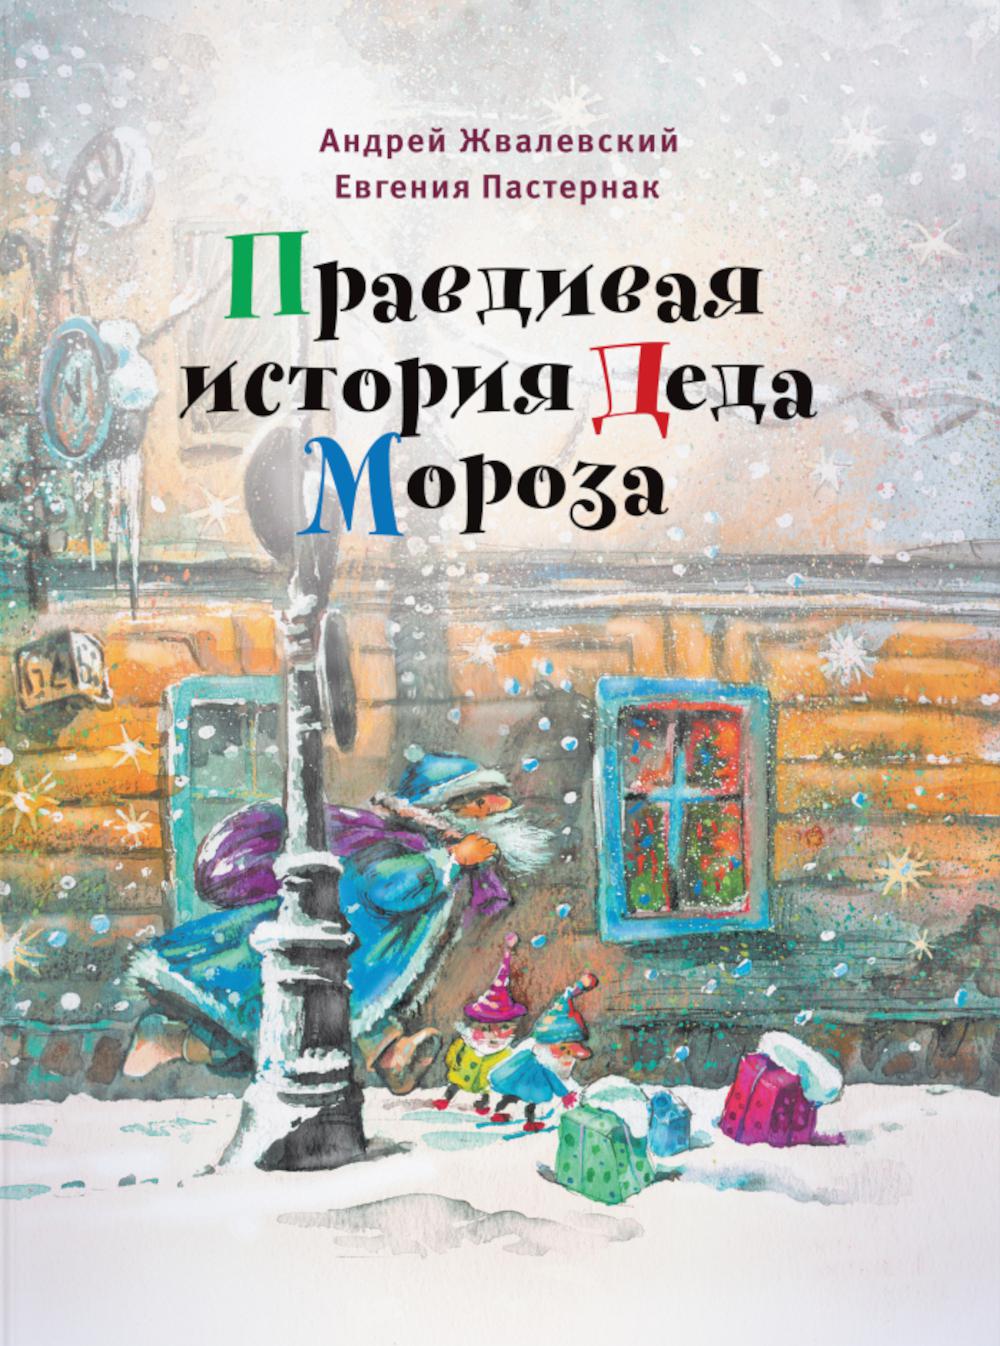 Правдивая история Деда Мороза. 7-е изд